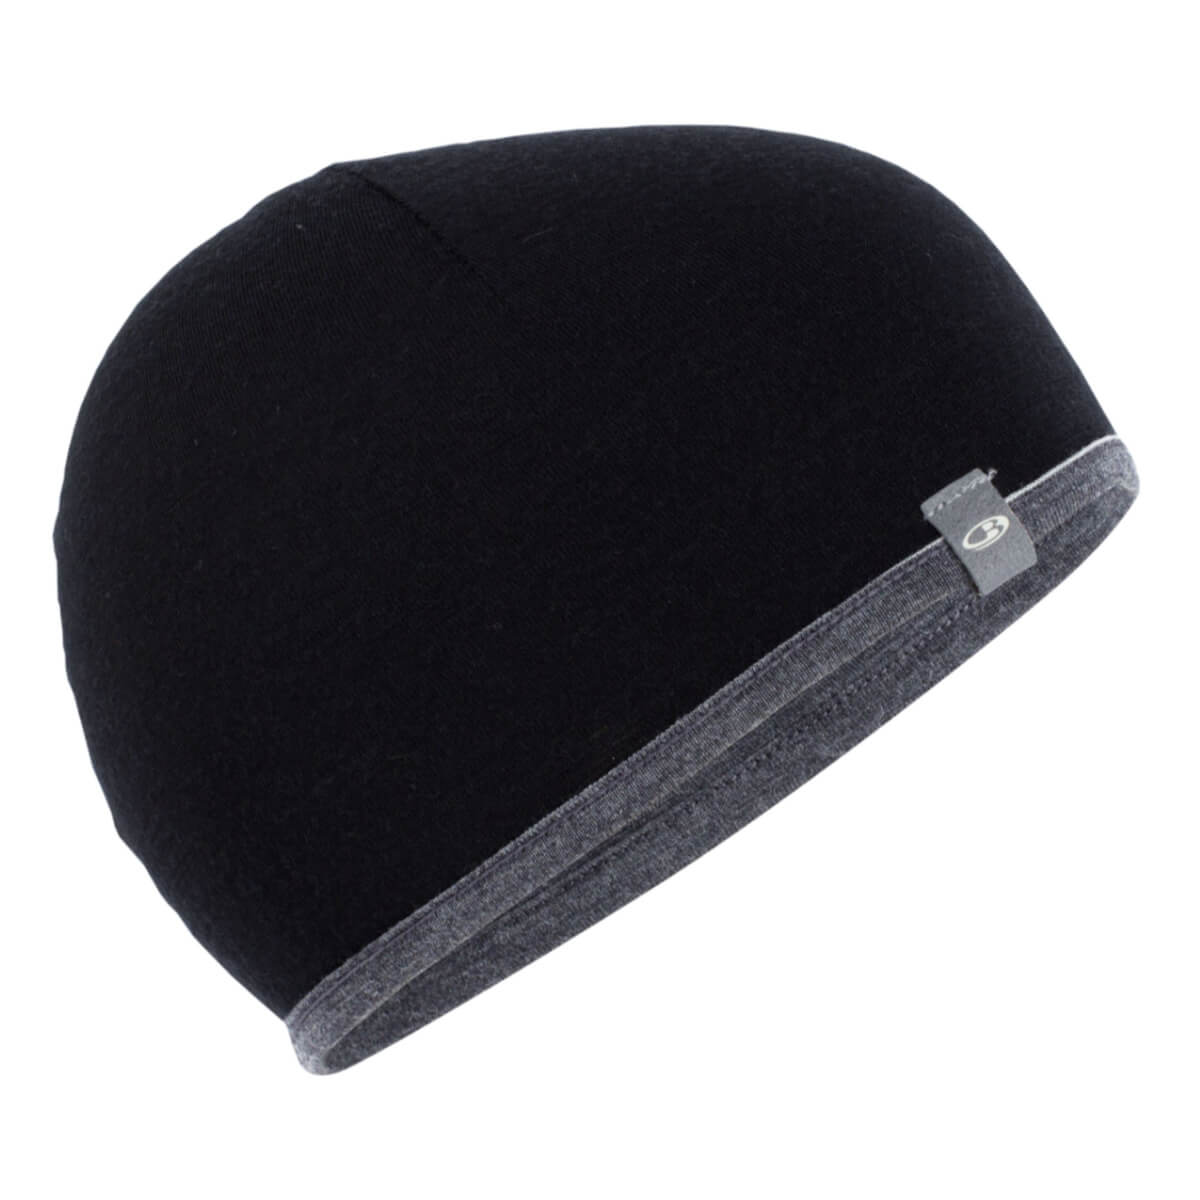 Icebreaker pocket hat black/gritstone heather, merino wool hat